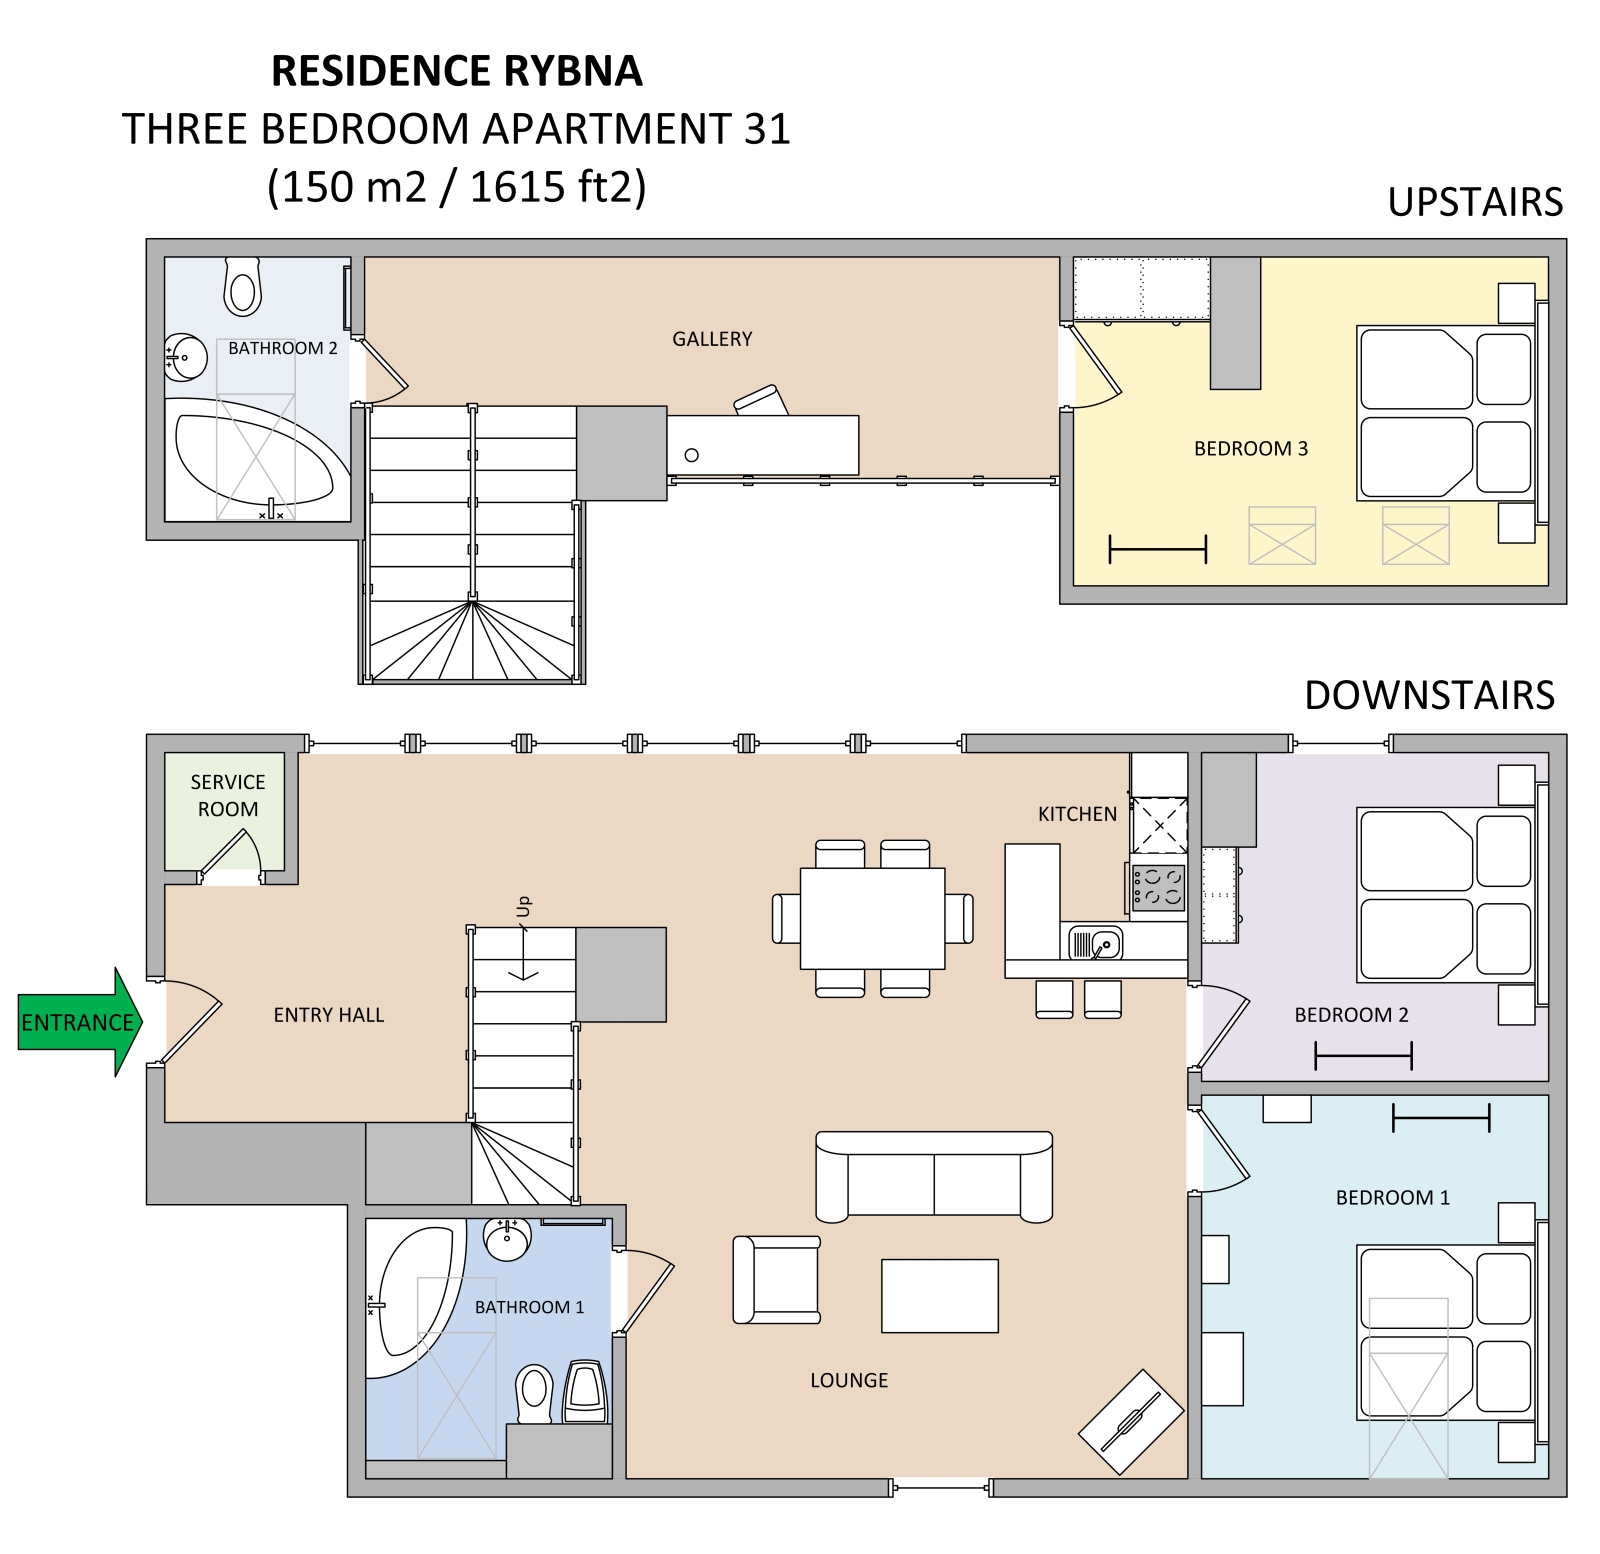 Floorplan of apartment 31 in Rybna Residence in Prague